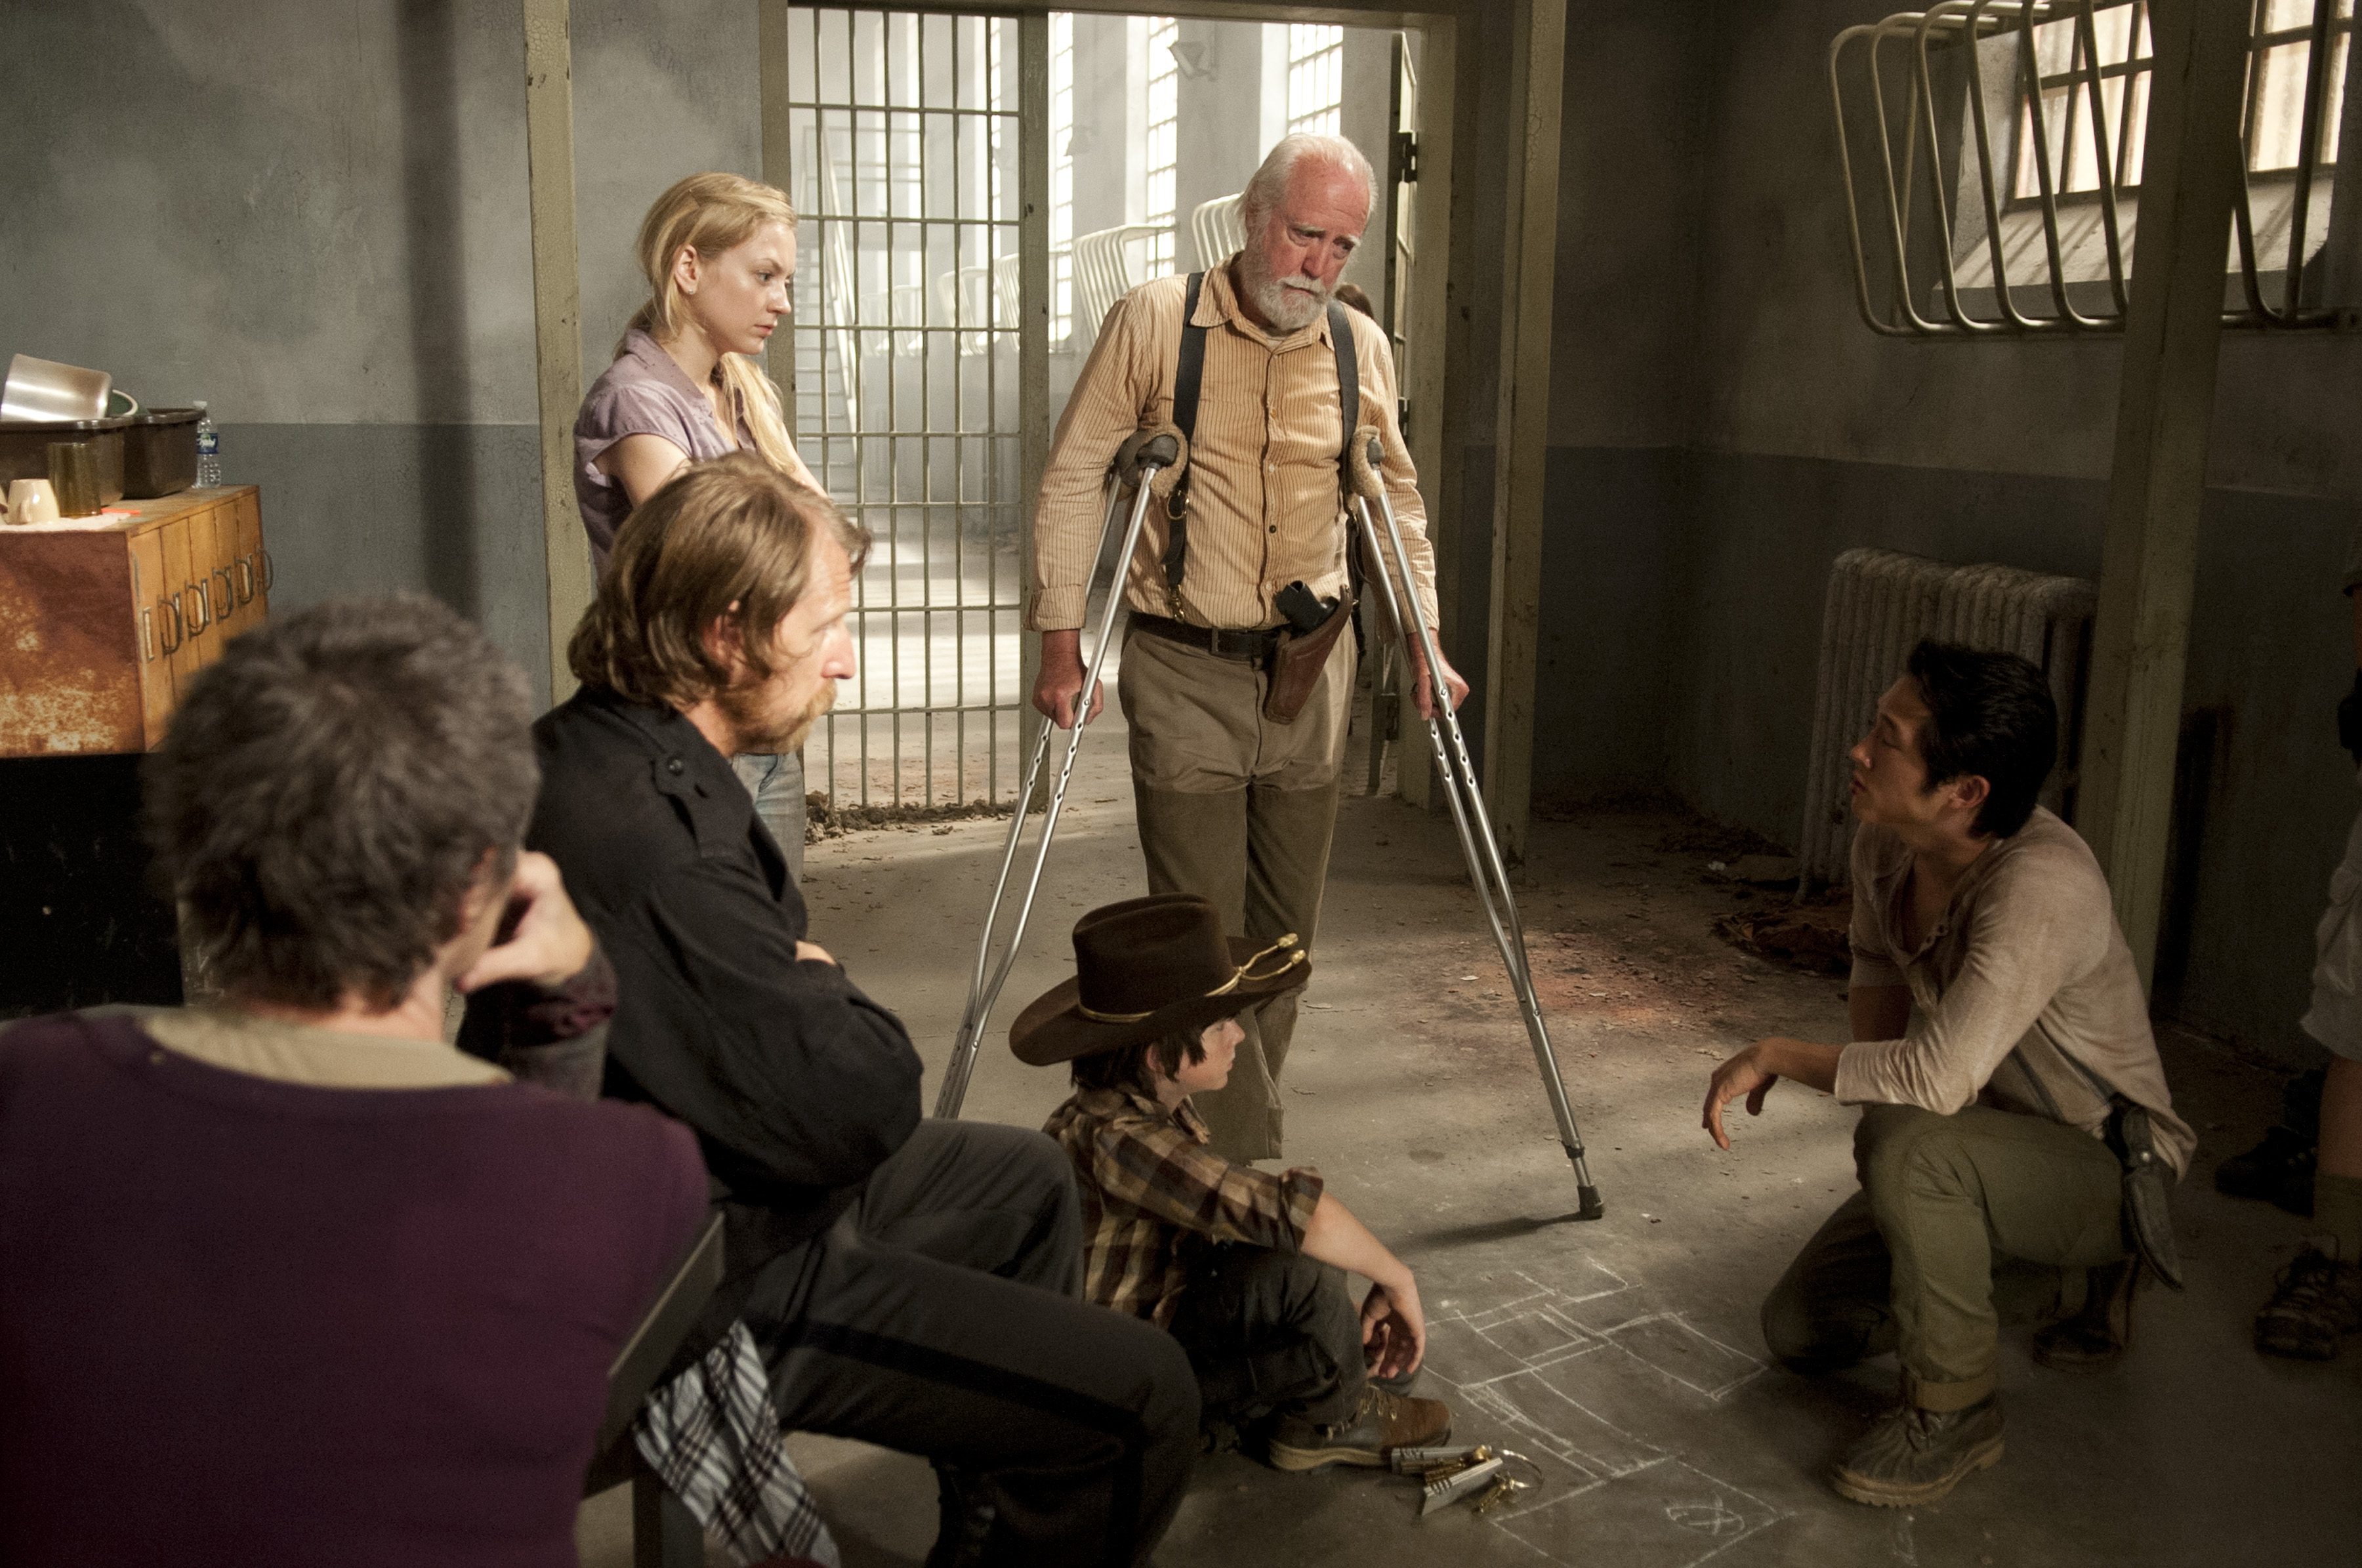 The Walking Dead Temporada 3 - serieswnet